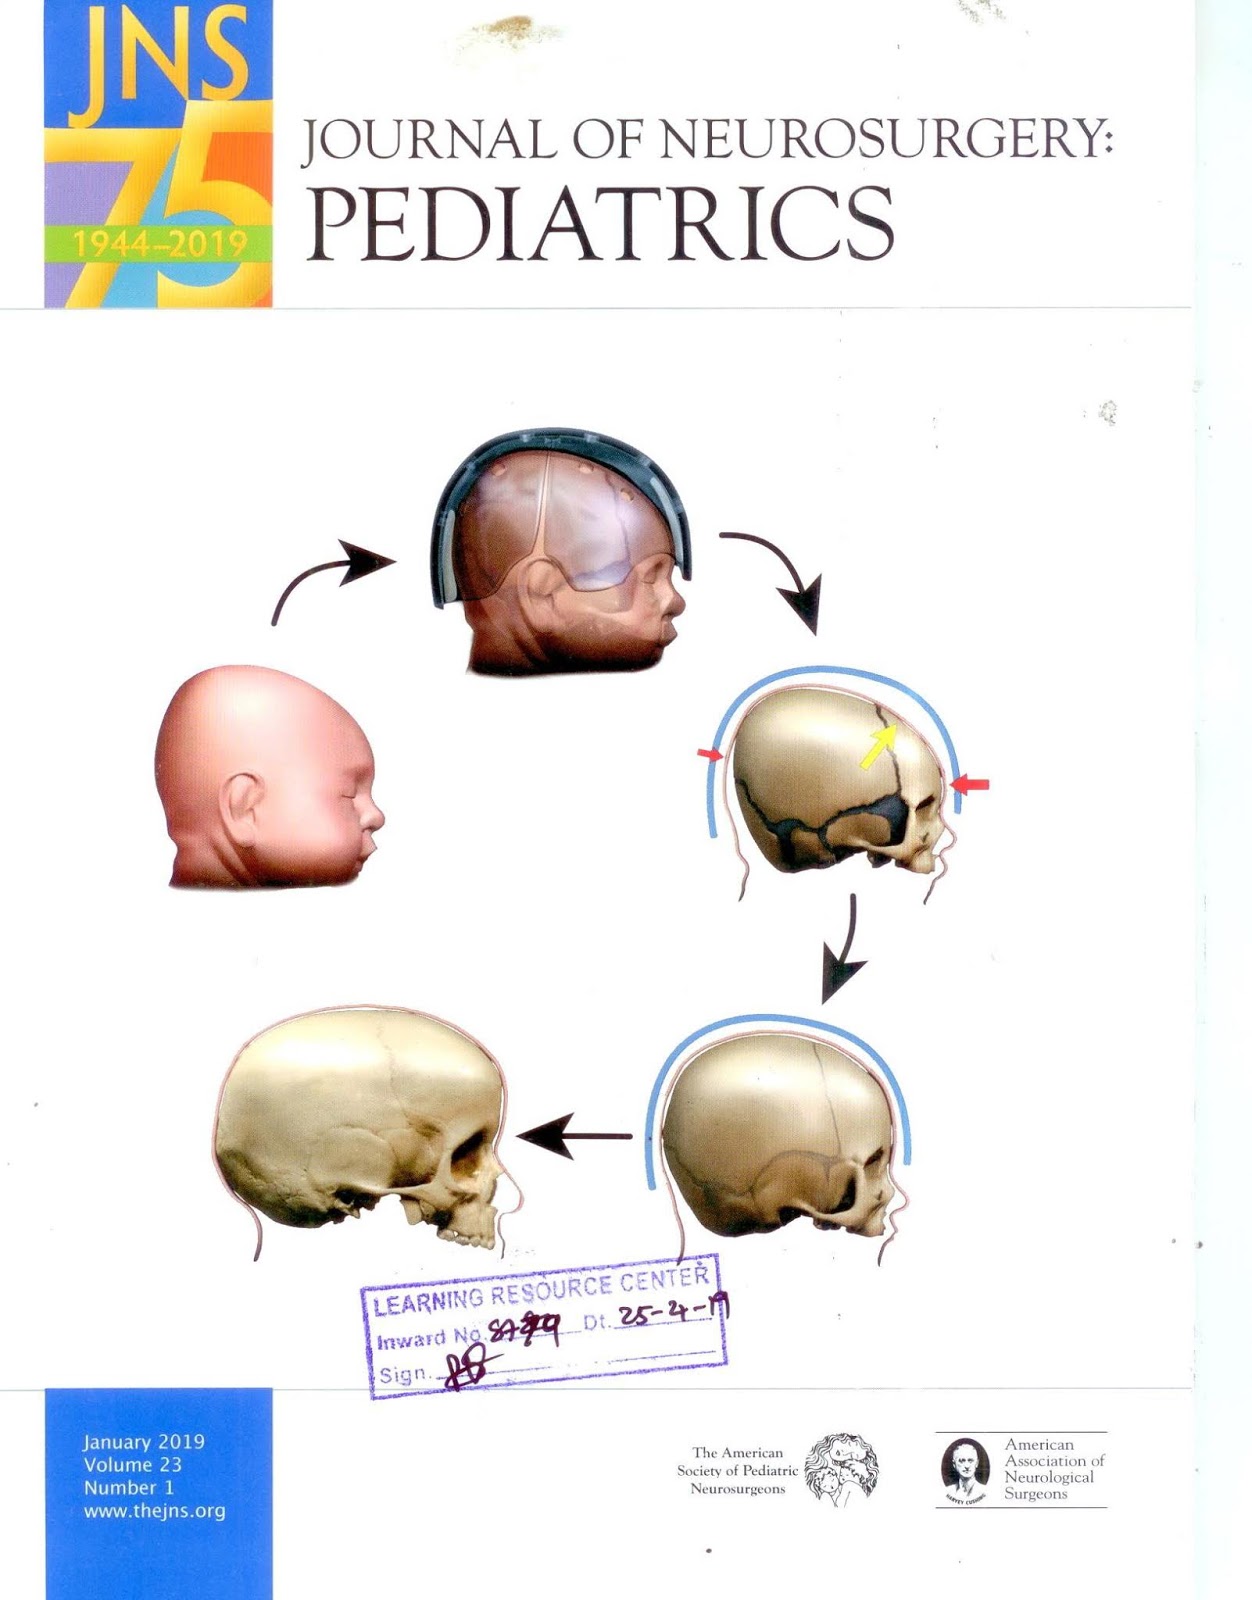 https://thejns.org/pediatrics/abstract/journals/j-neurosurg-pediatr/23/1/j-neurosurg-pediatr.23.issue-1.xml